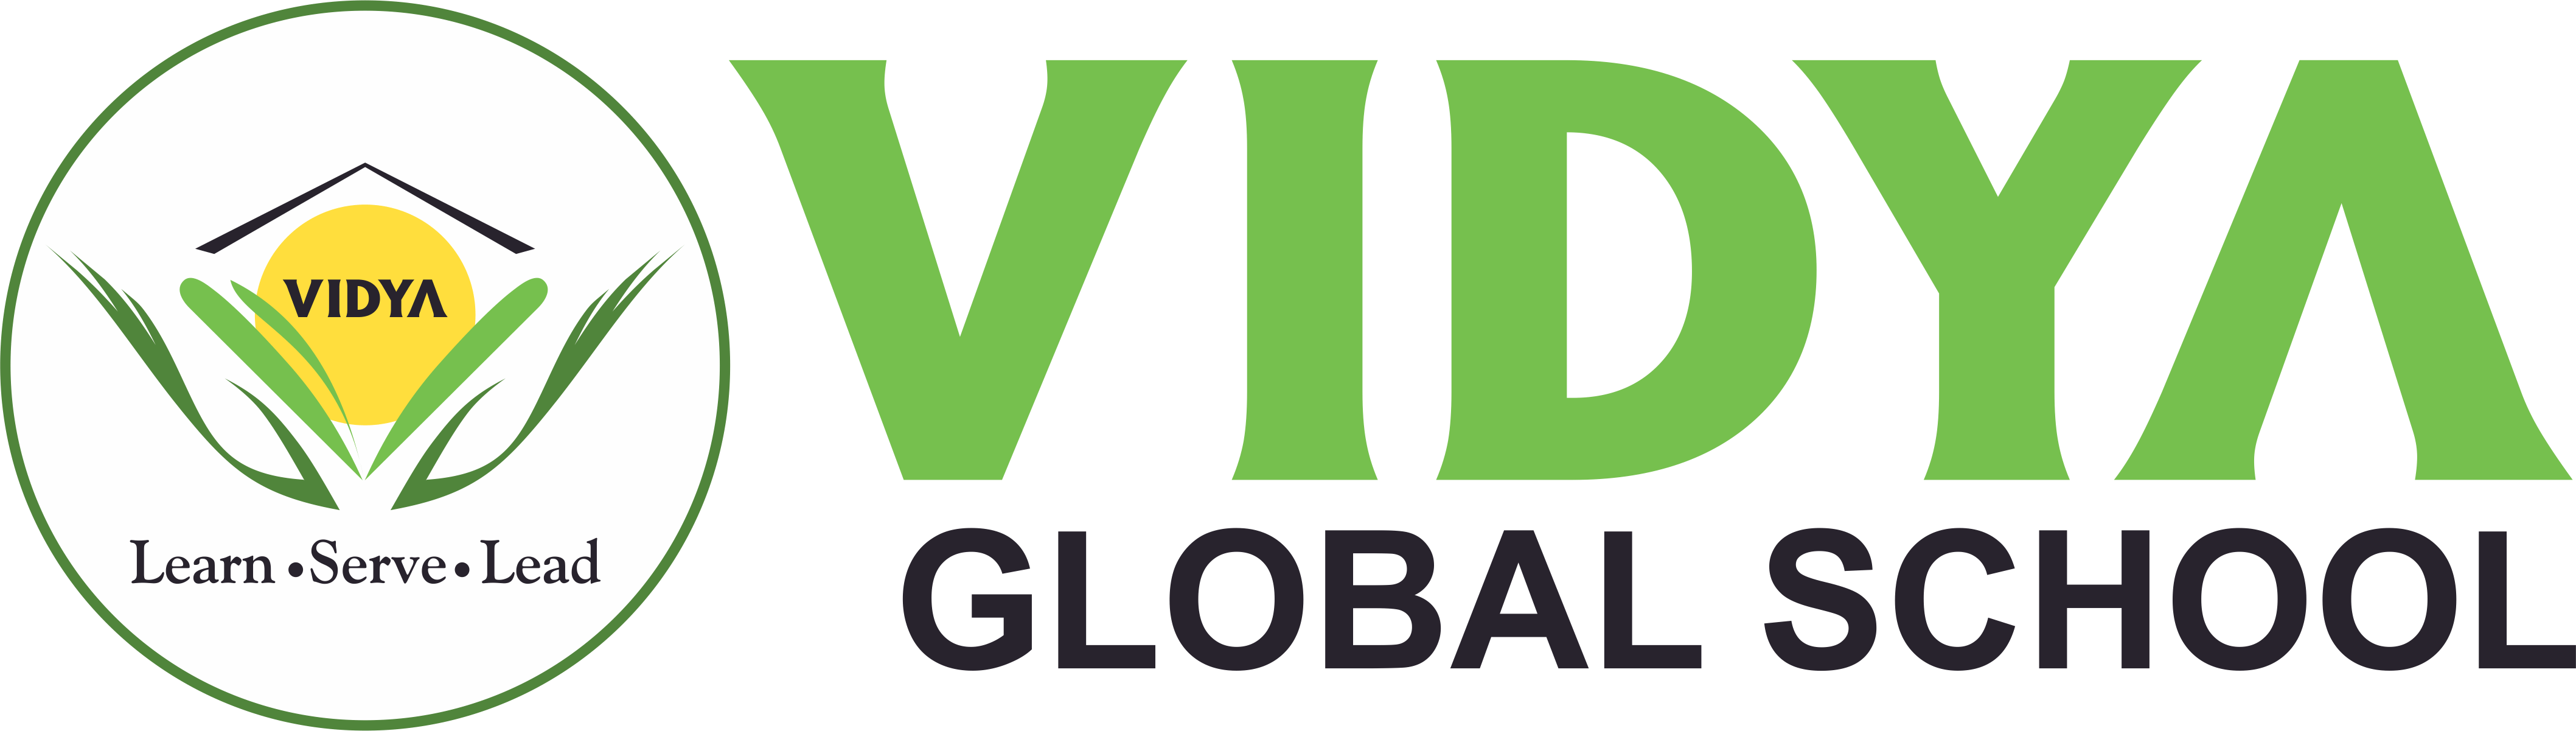 Vidya Logo - Vidya Global School Invites Job Applications